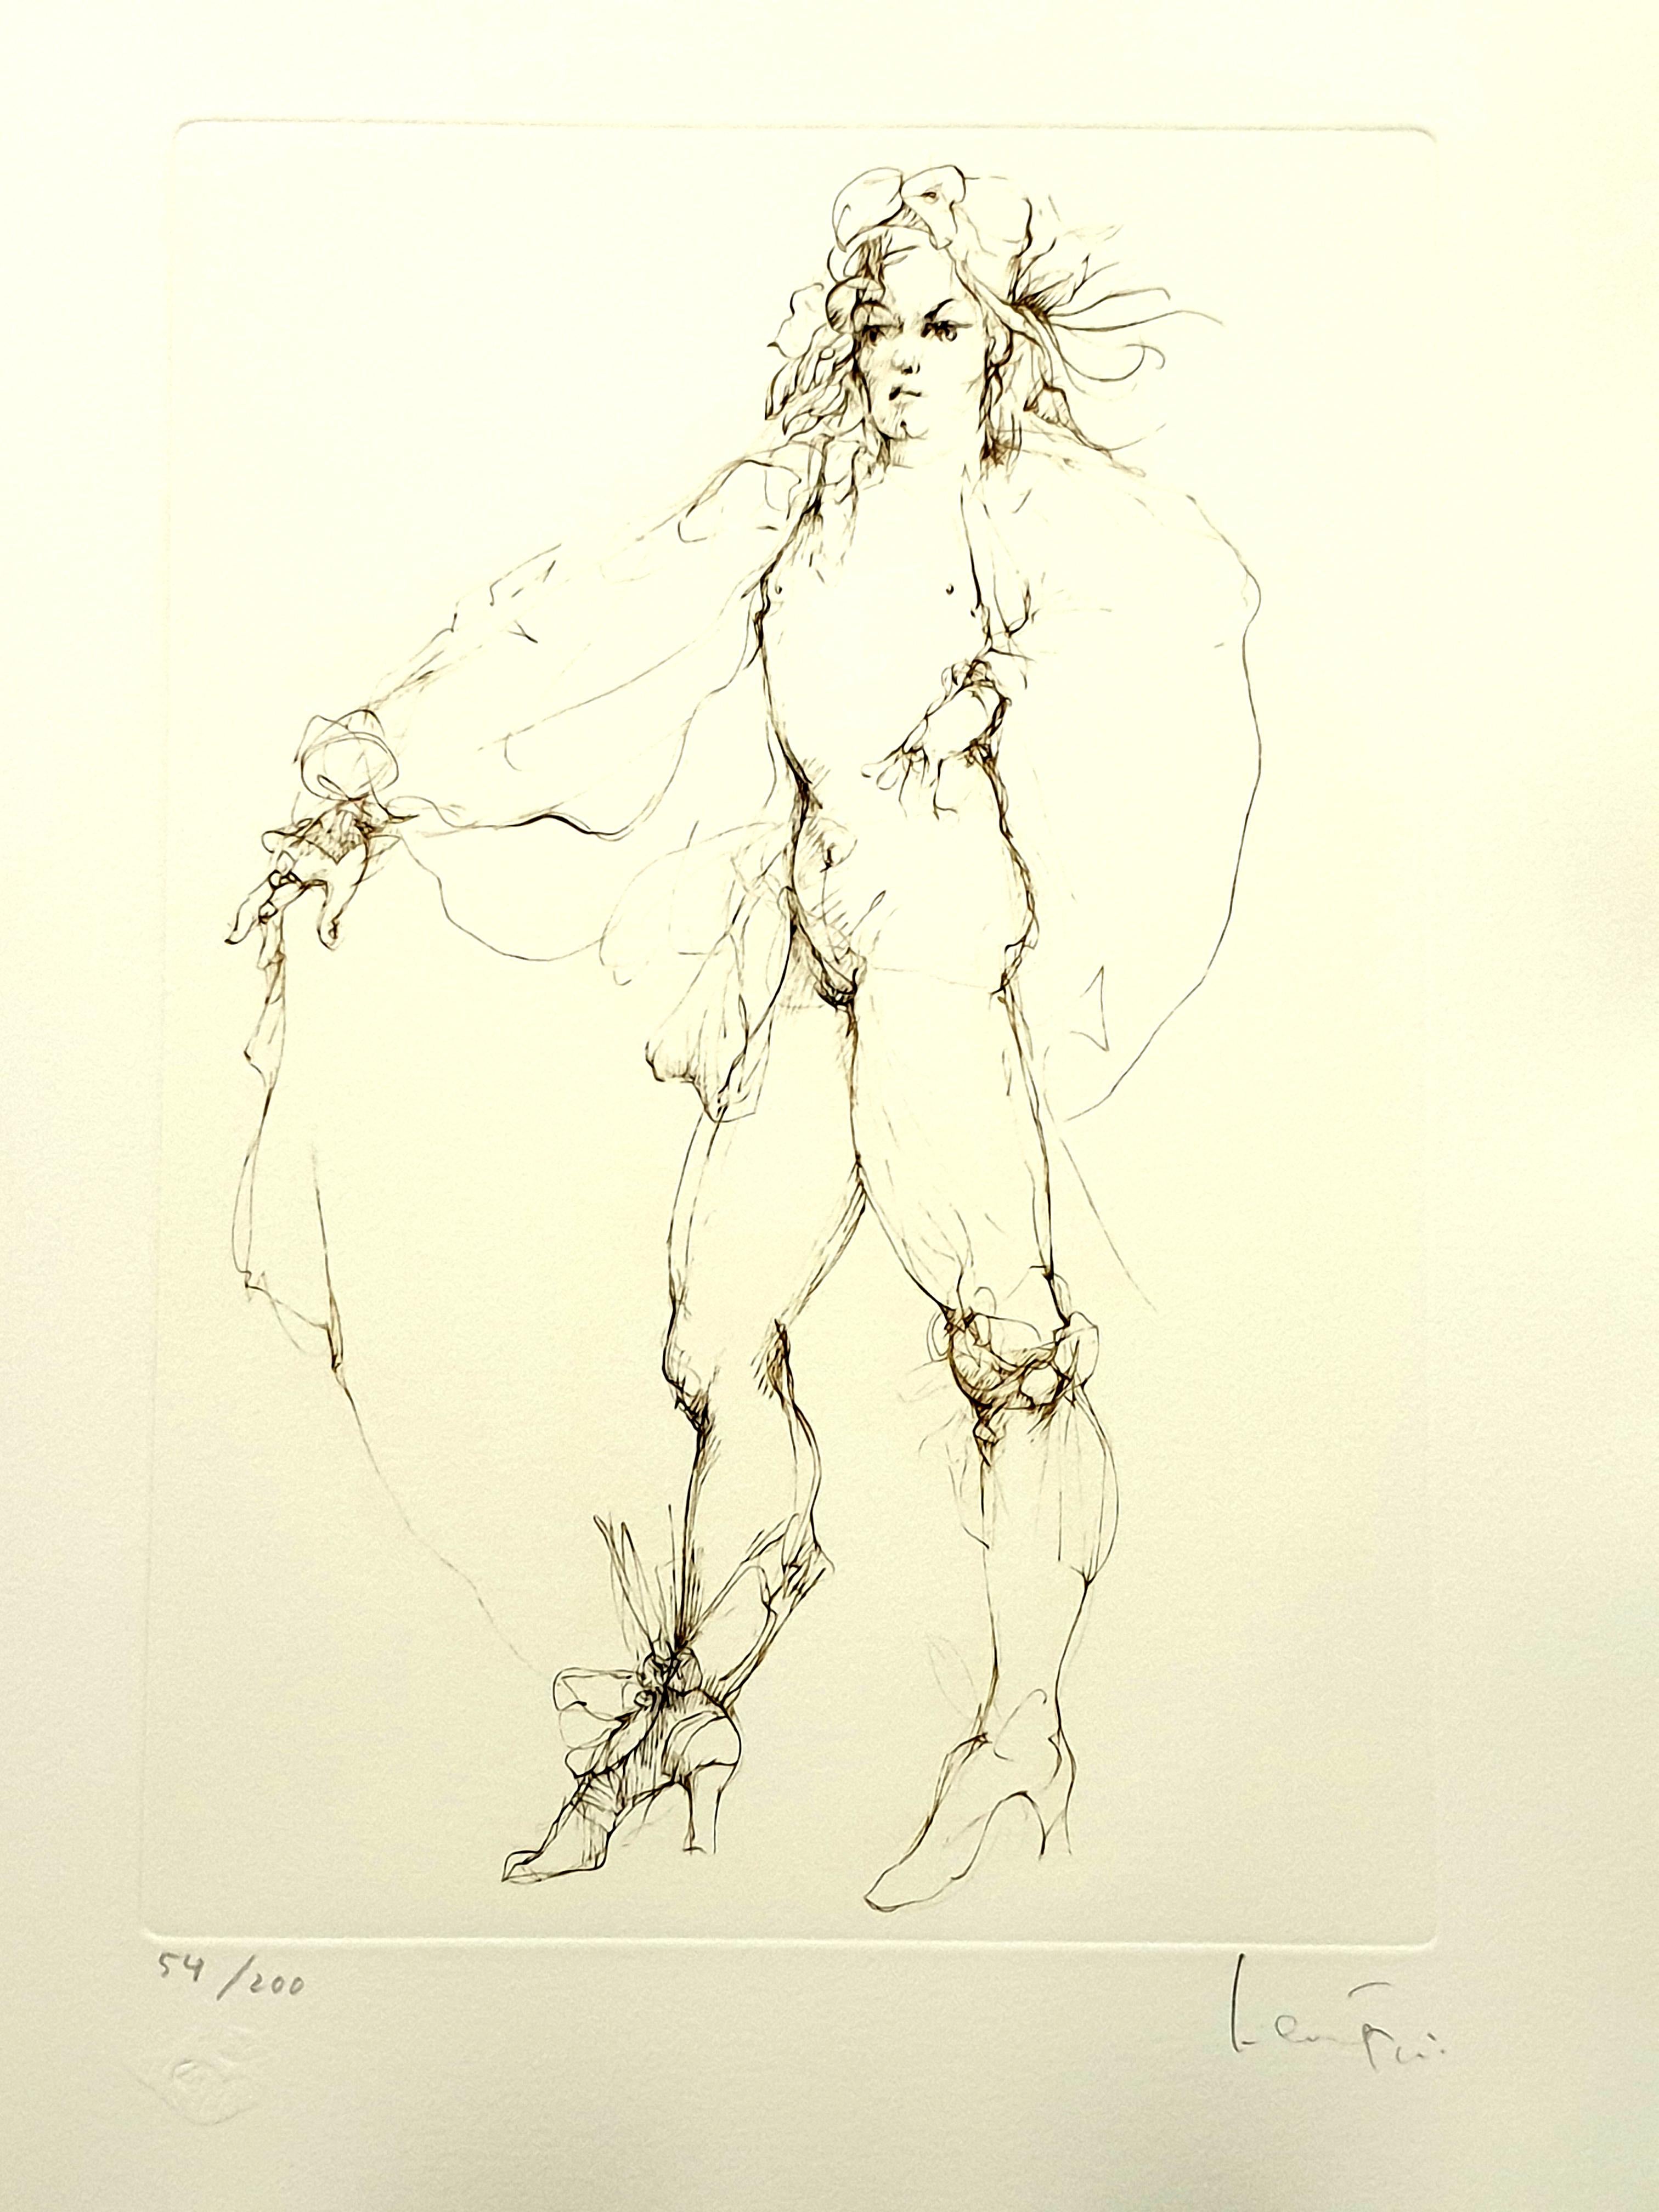 Leonor Fini - Fearless - Original Handsigned Lithograph
Les Elus de la Nuit
1986
Conditions: excellent
Handsigned and Numbered
Edition: 230
Dimensions: 38 x 28 cm 
Editions: Trinckvel, Paris